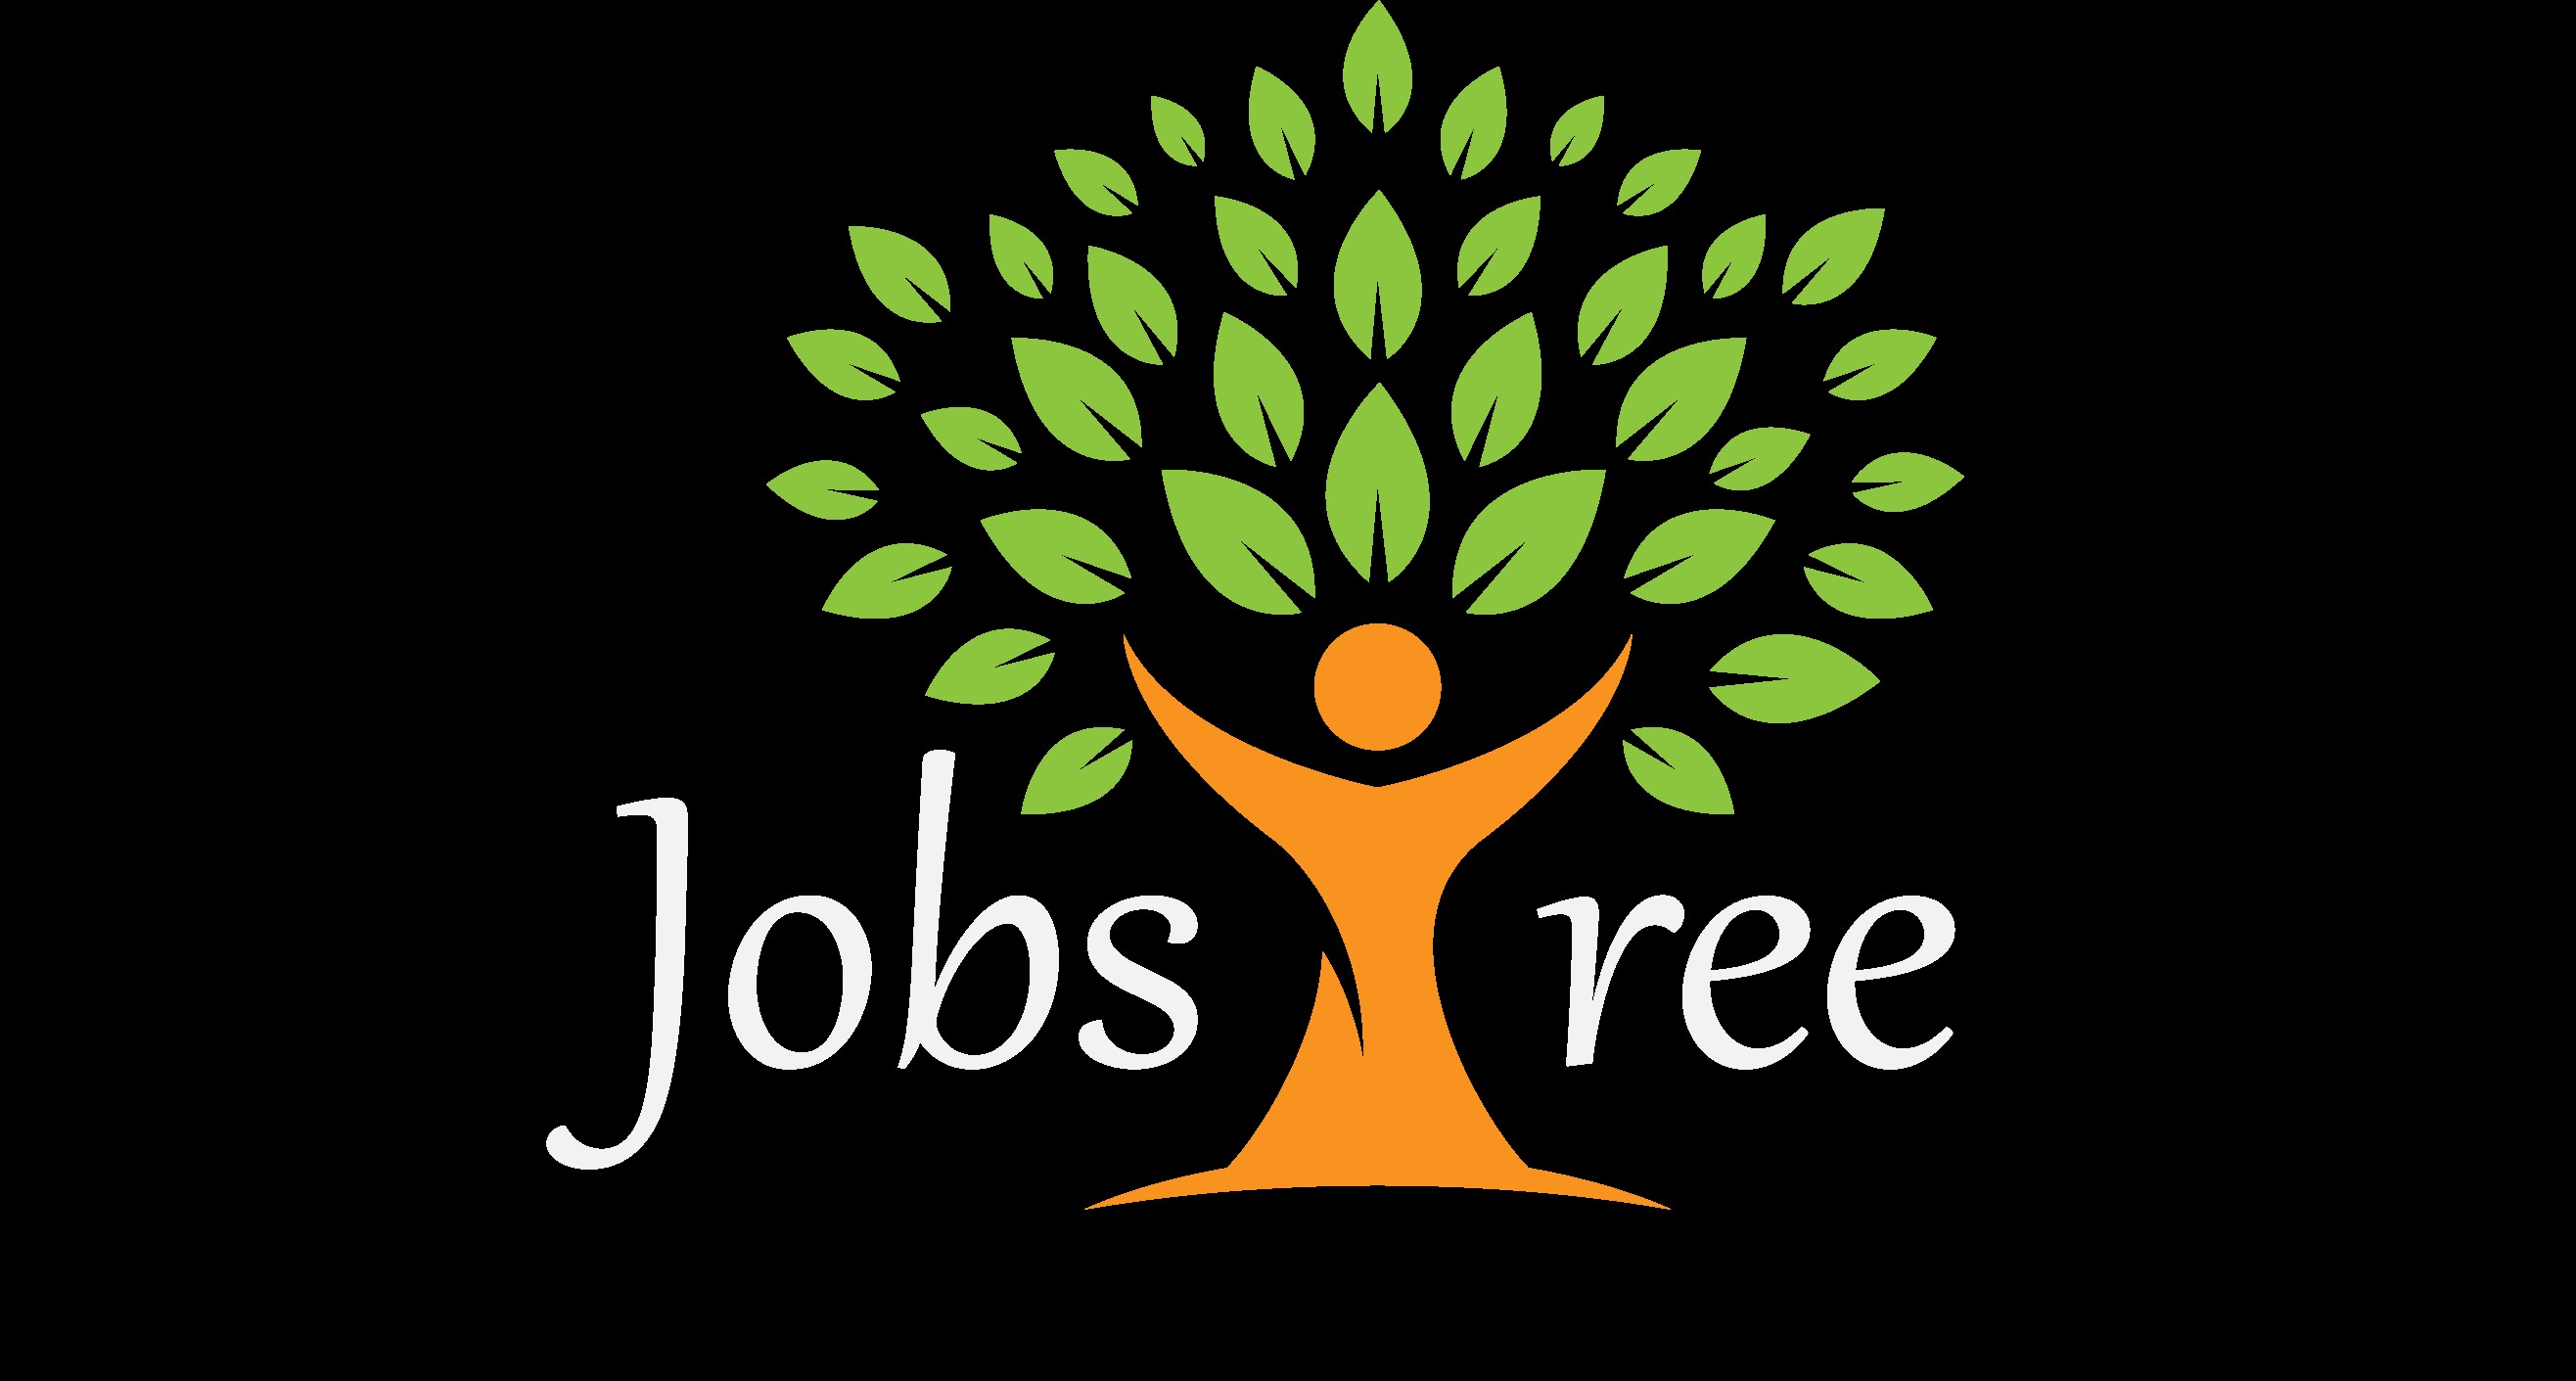 Jobs tree Profile Picture